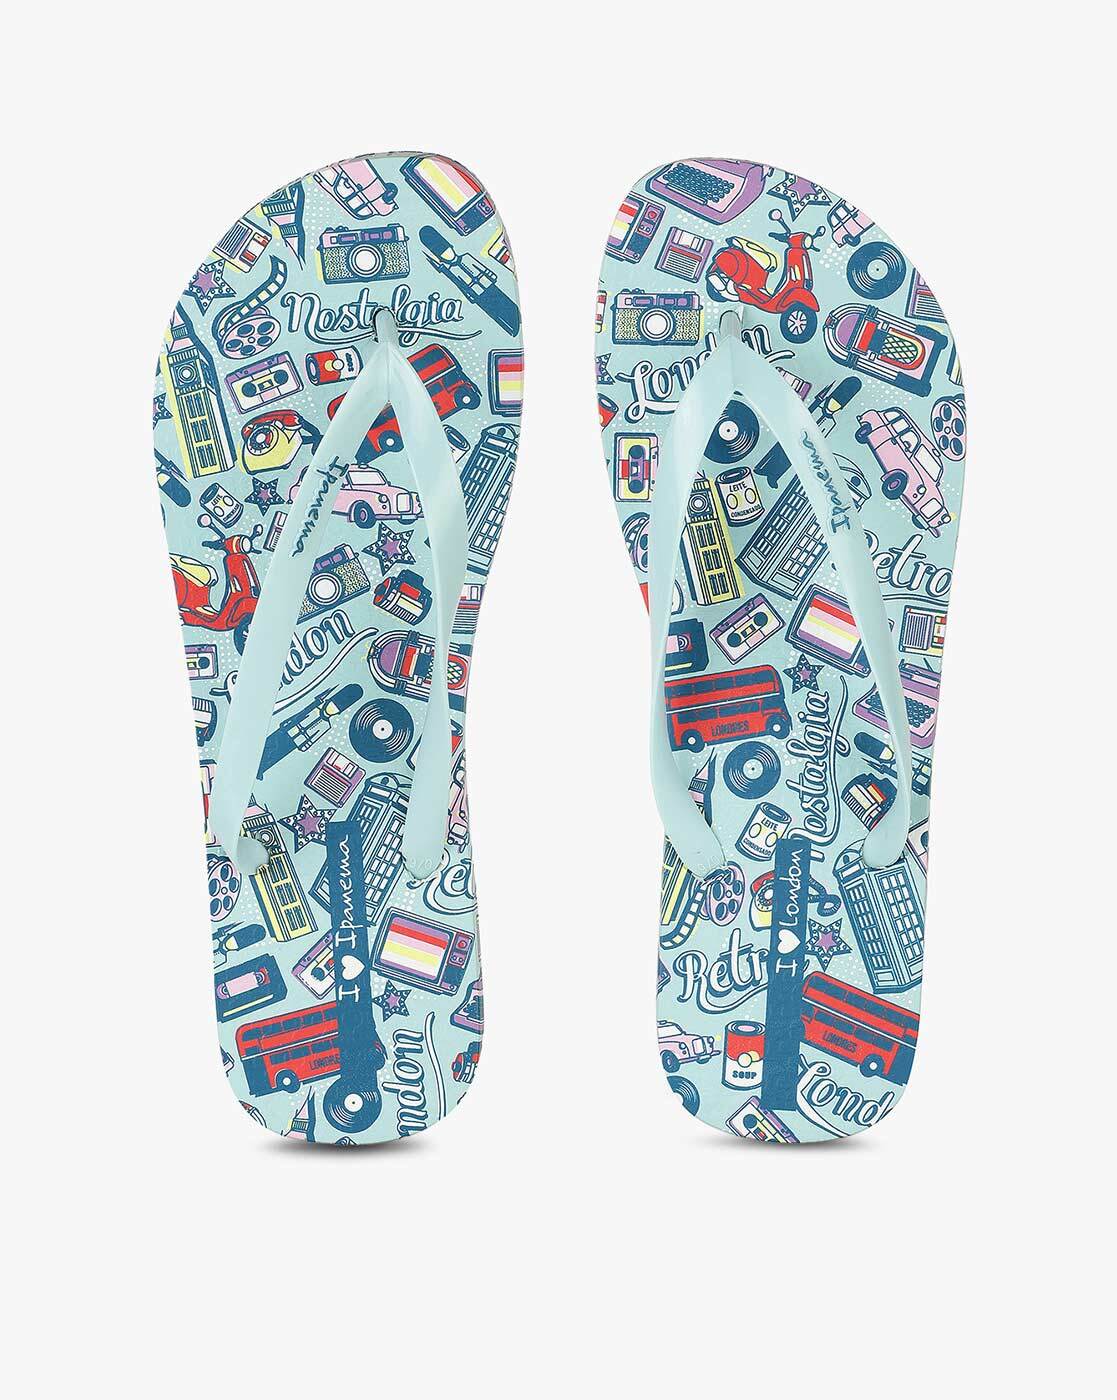 ipanema slippers online